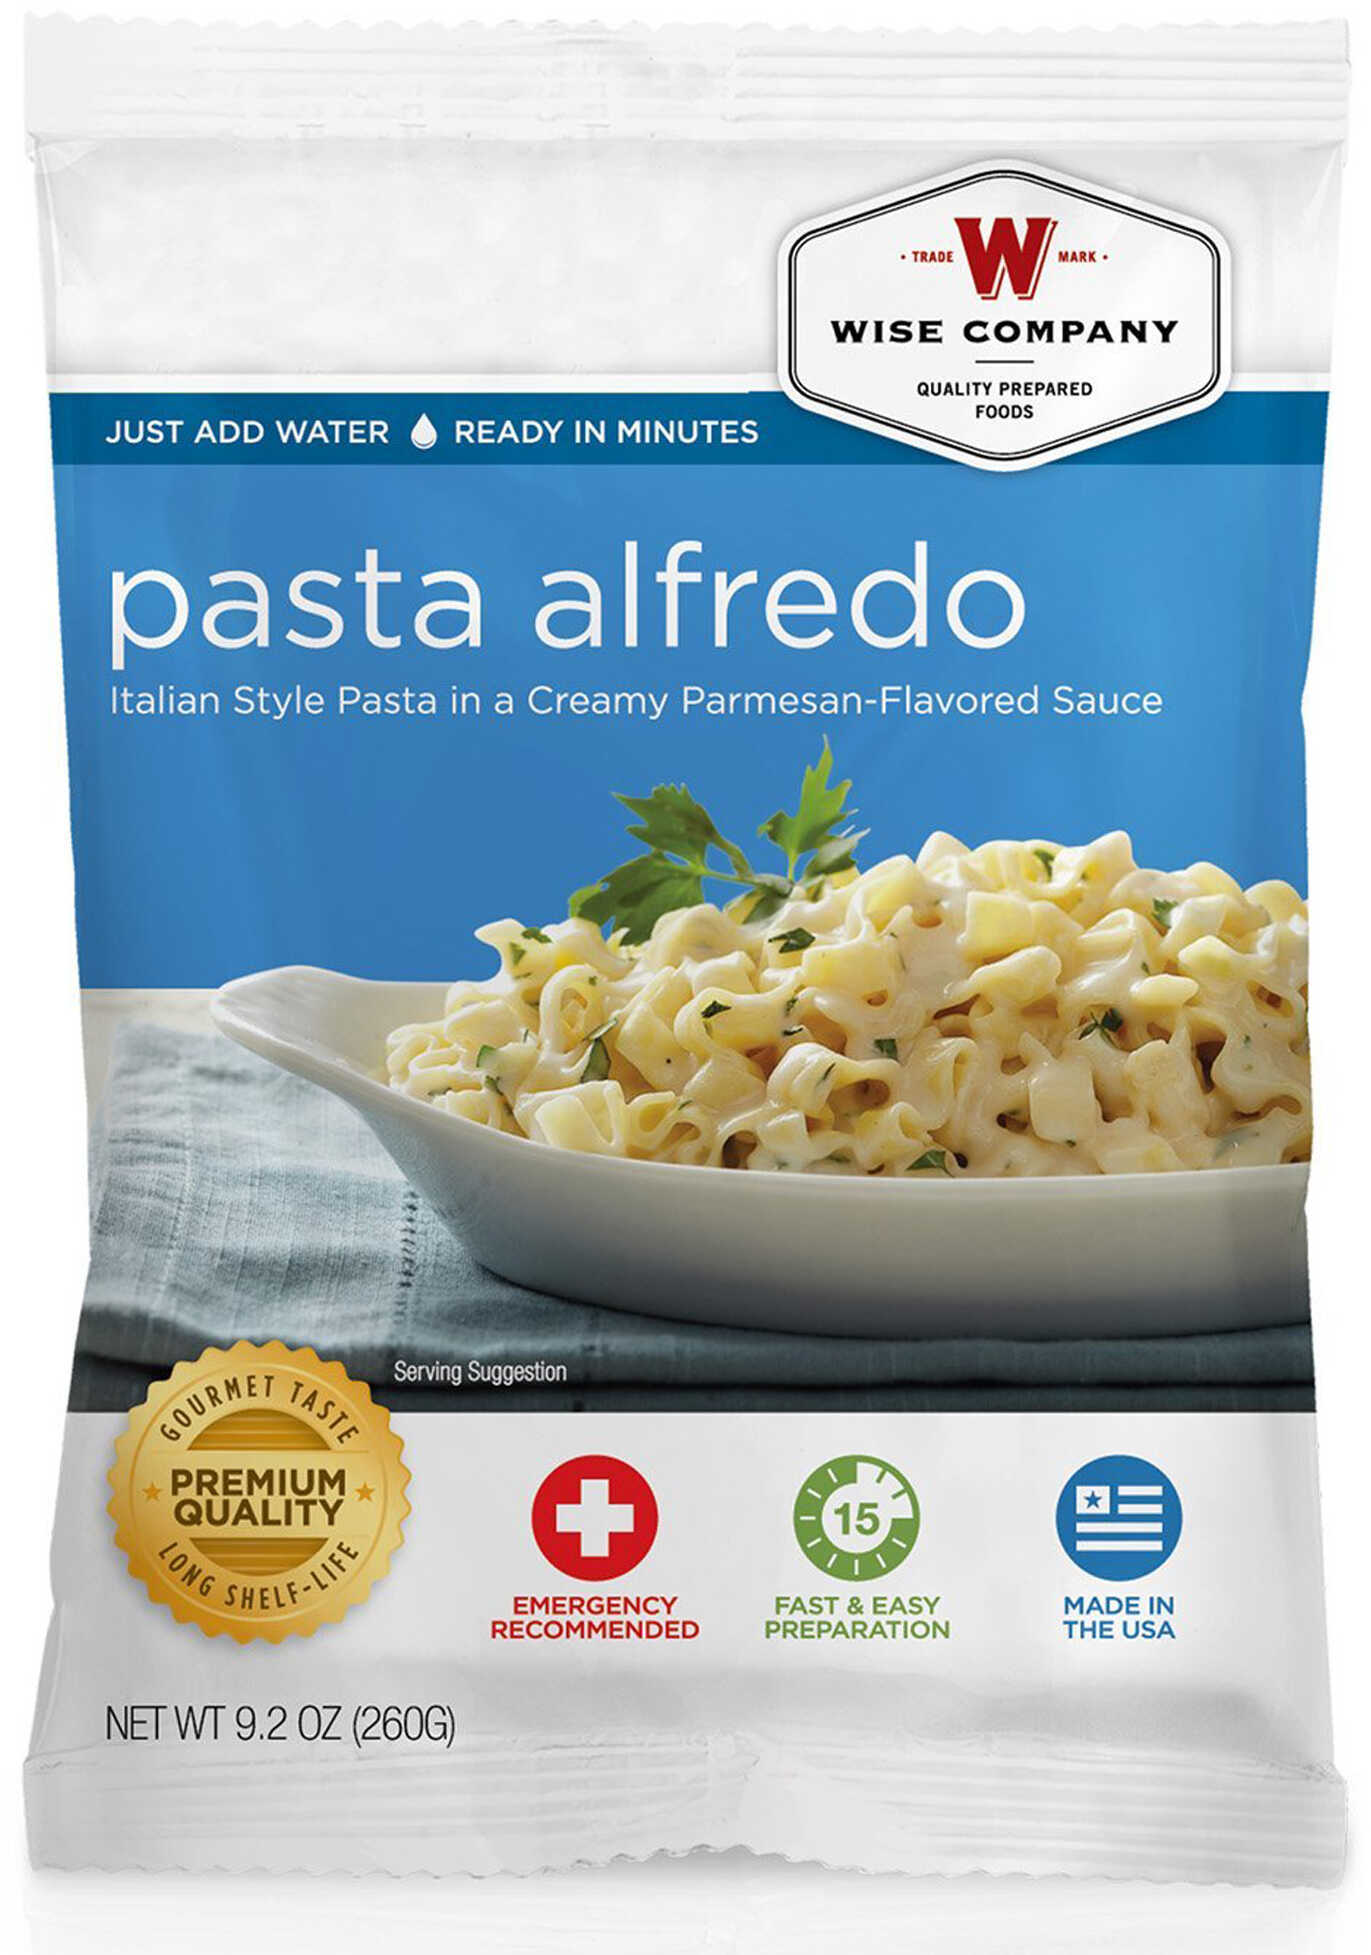 Wise Foods Outdoor Packs 6 Ct/4 Servings Pasta Alfredo 2W02206